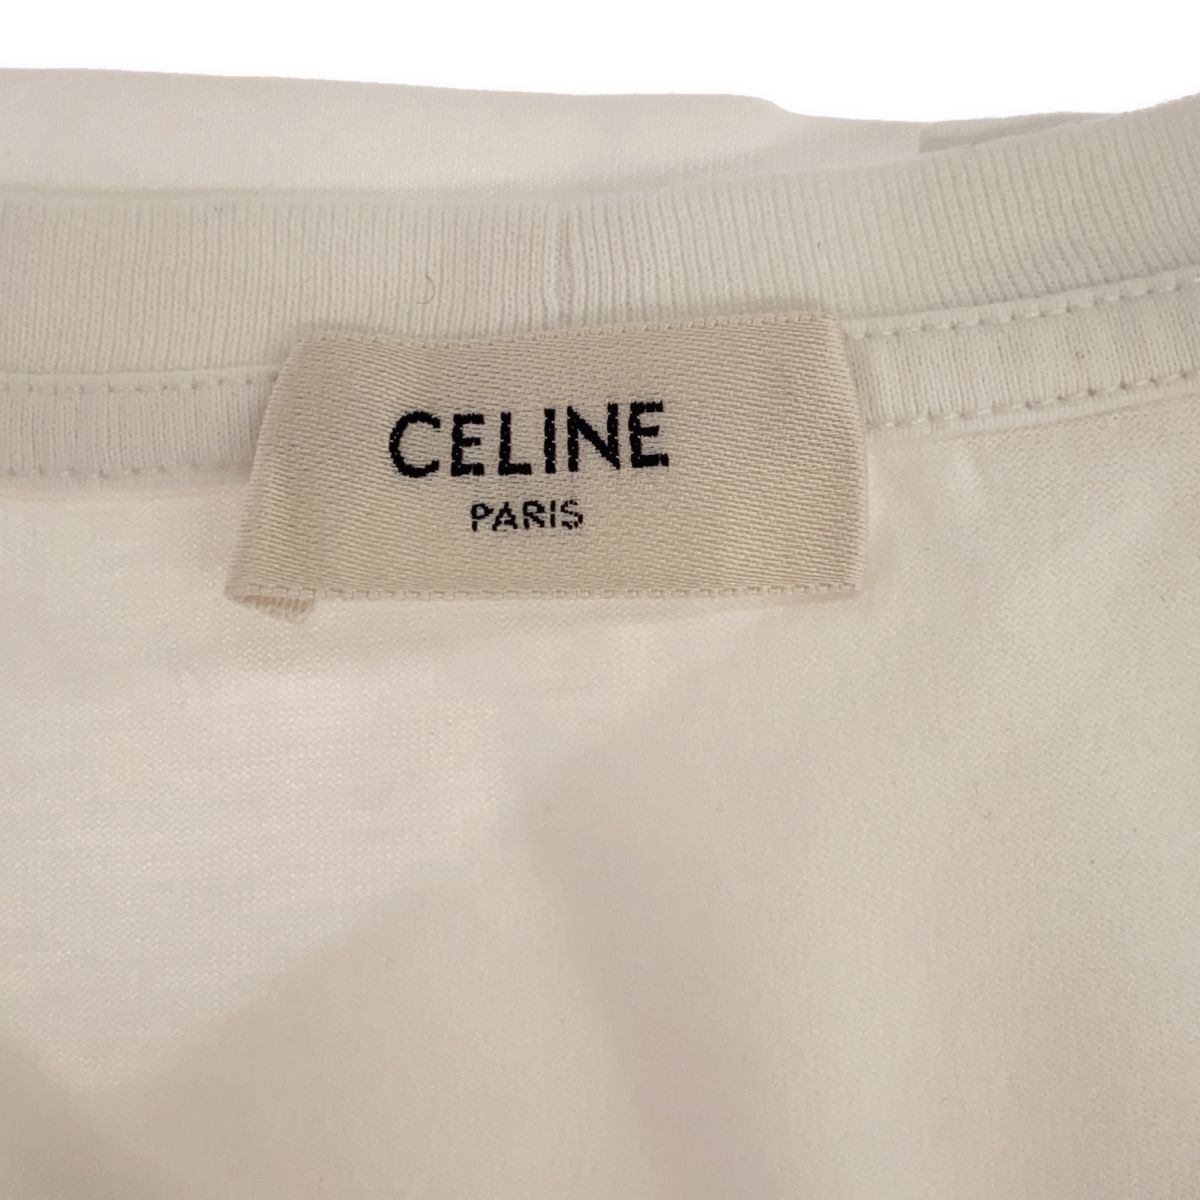 CELINE セリーヌ ロゴ Tシャツ 白 ホワイト 2X314916G ブランド 